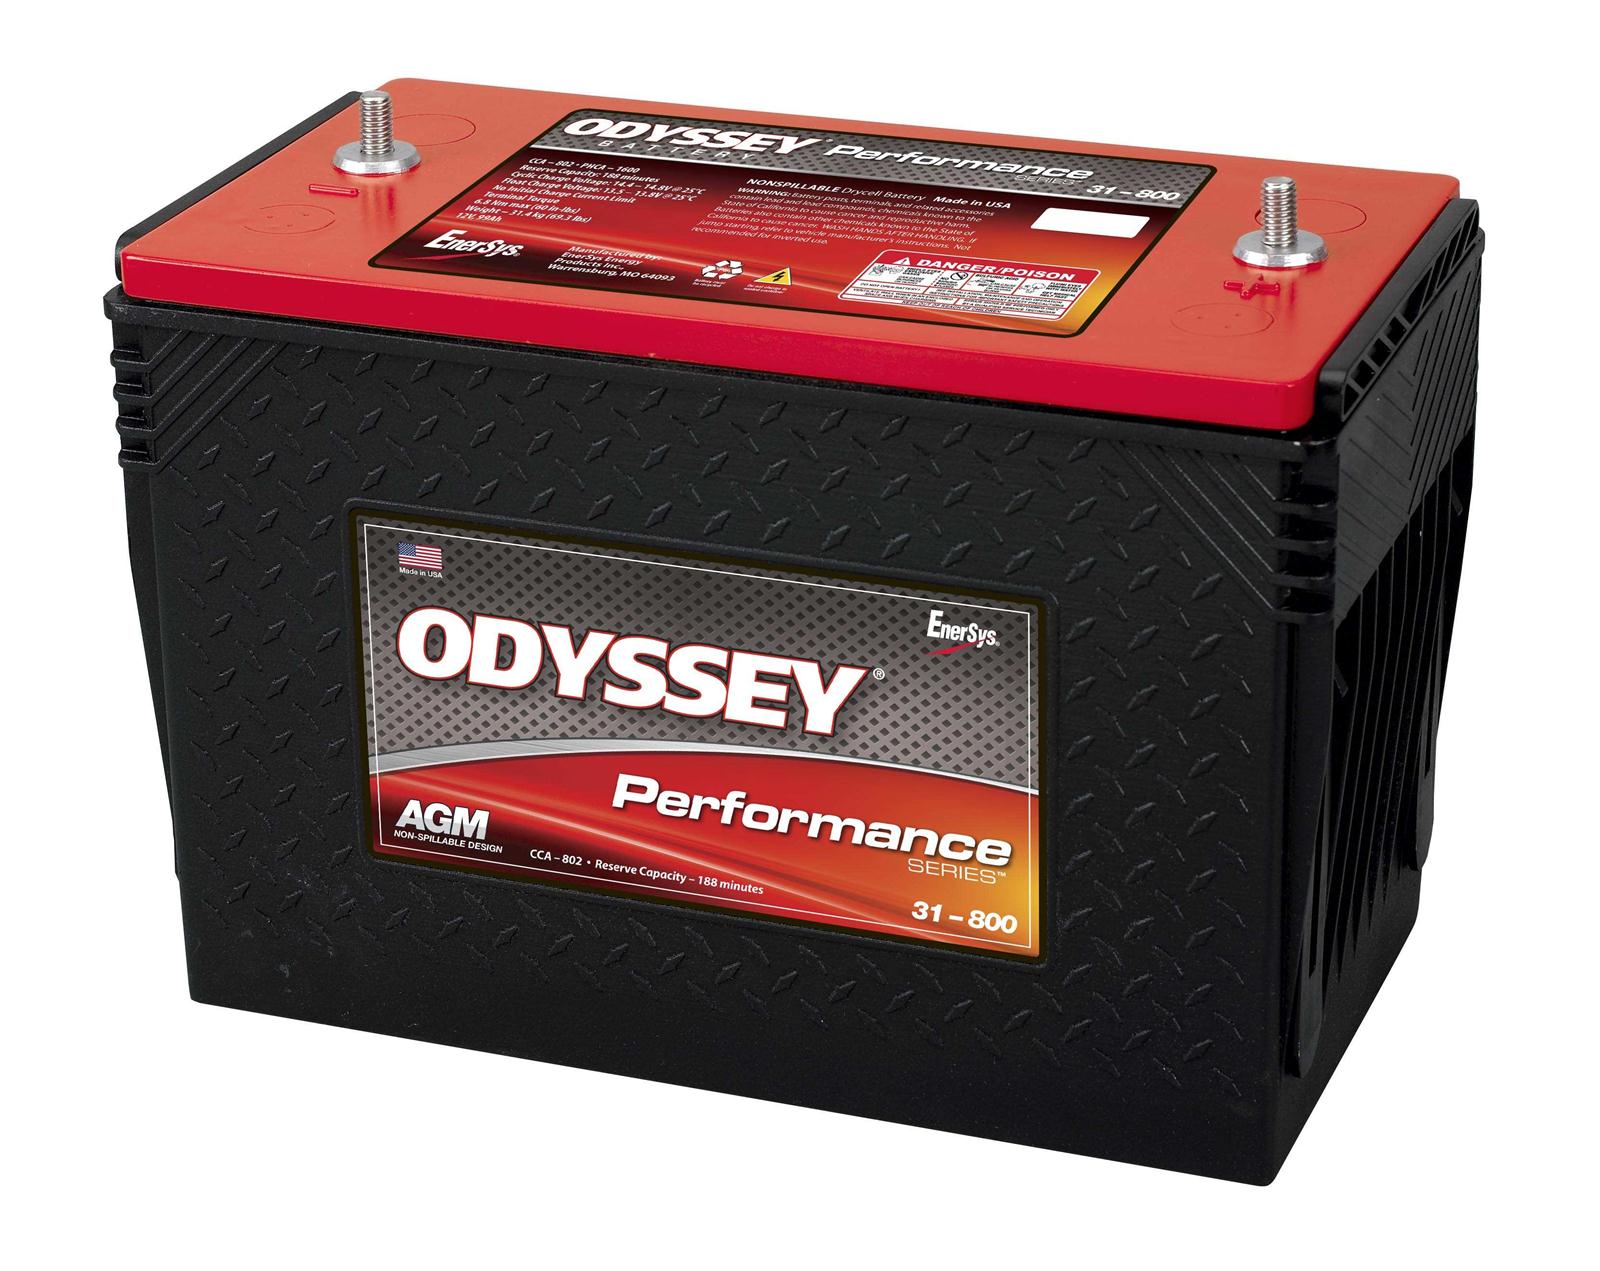 Аккумулятор Odyssey 49-950. Battery Group 31 950 cca. Odyssey extreme AGM. Одиссей 110 AGM. Battery and performance